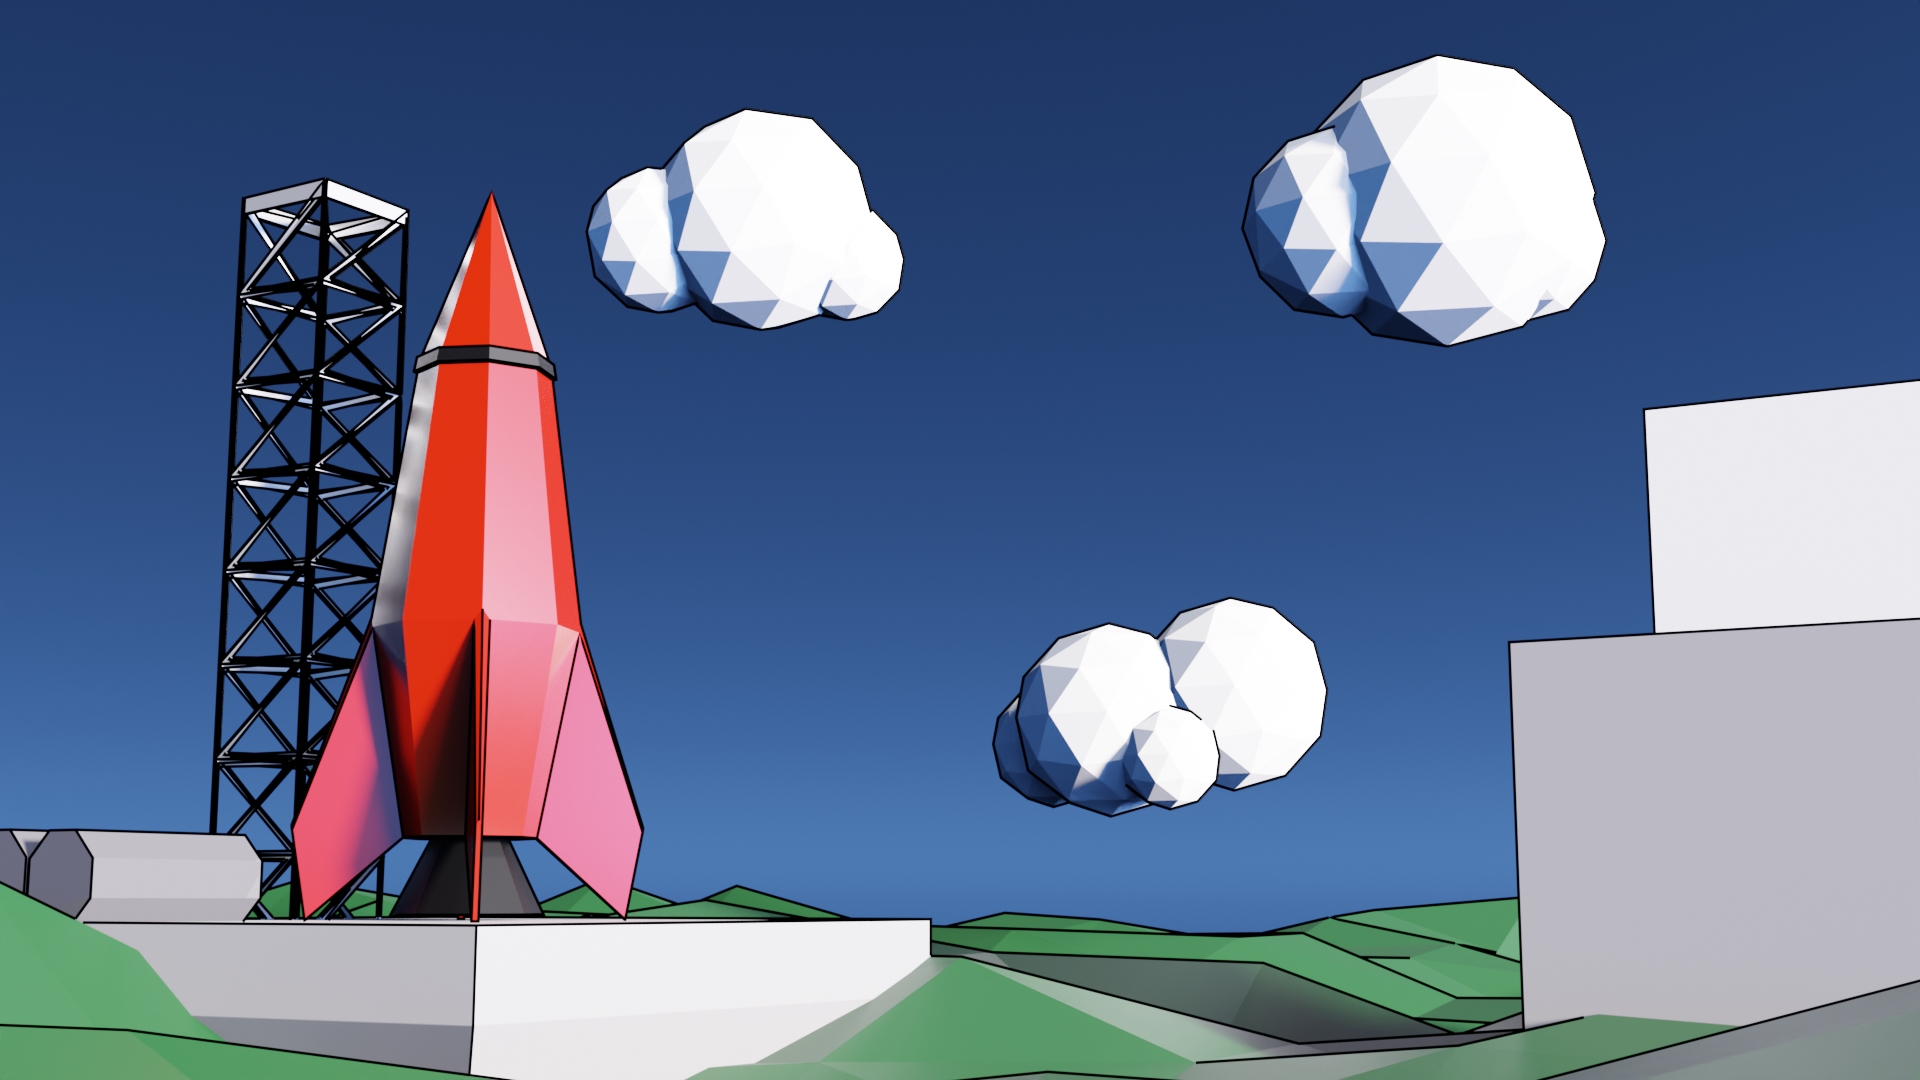 The Blender Creative Suite Background image of a Rocket